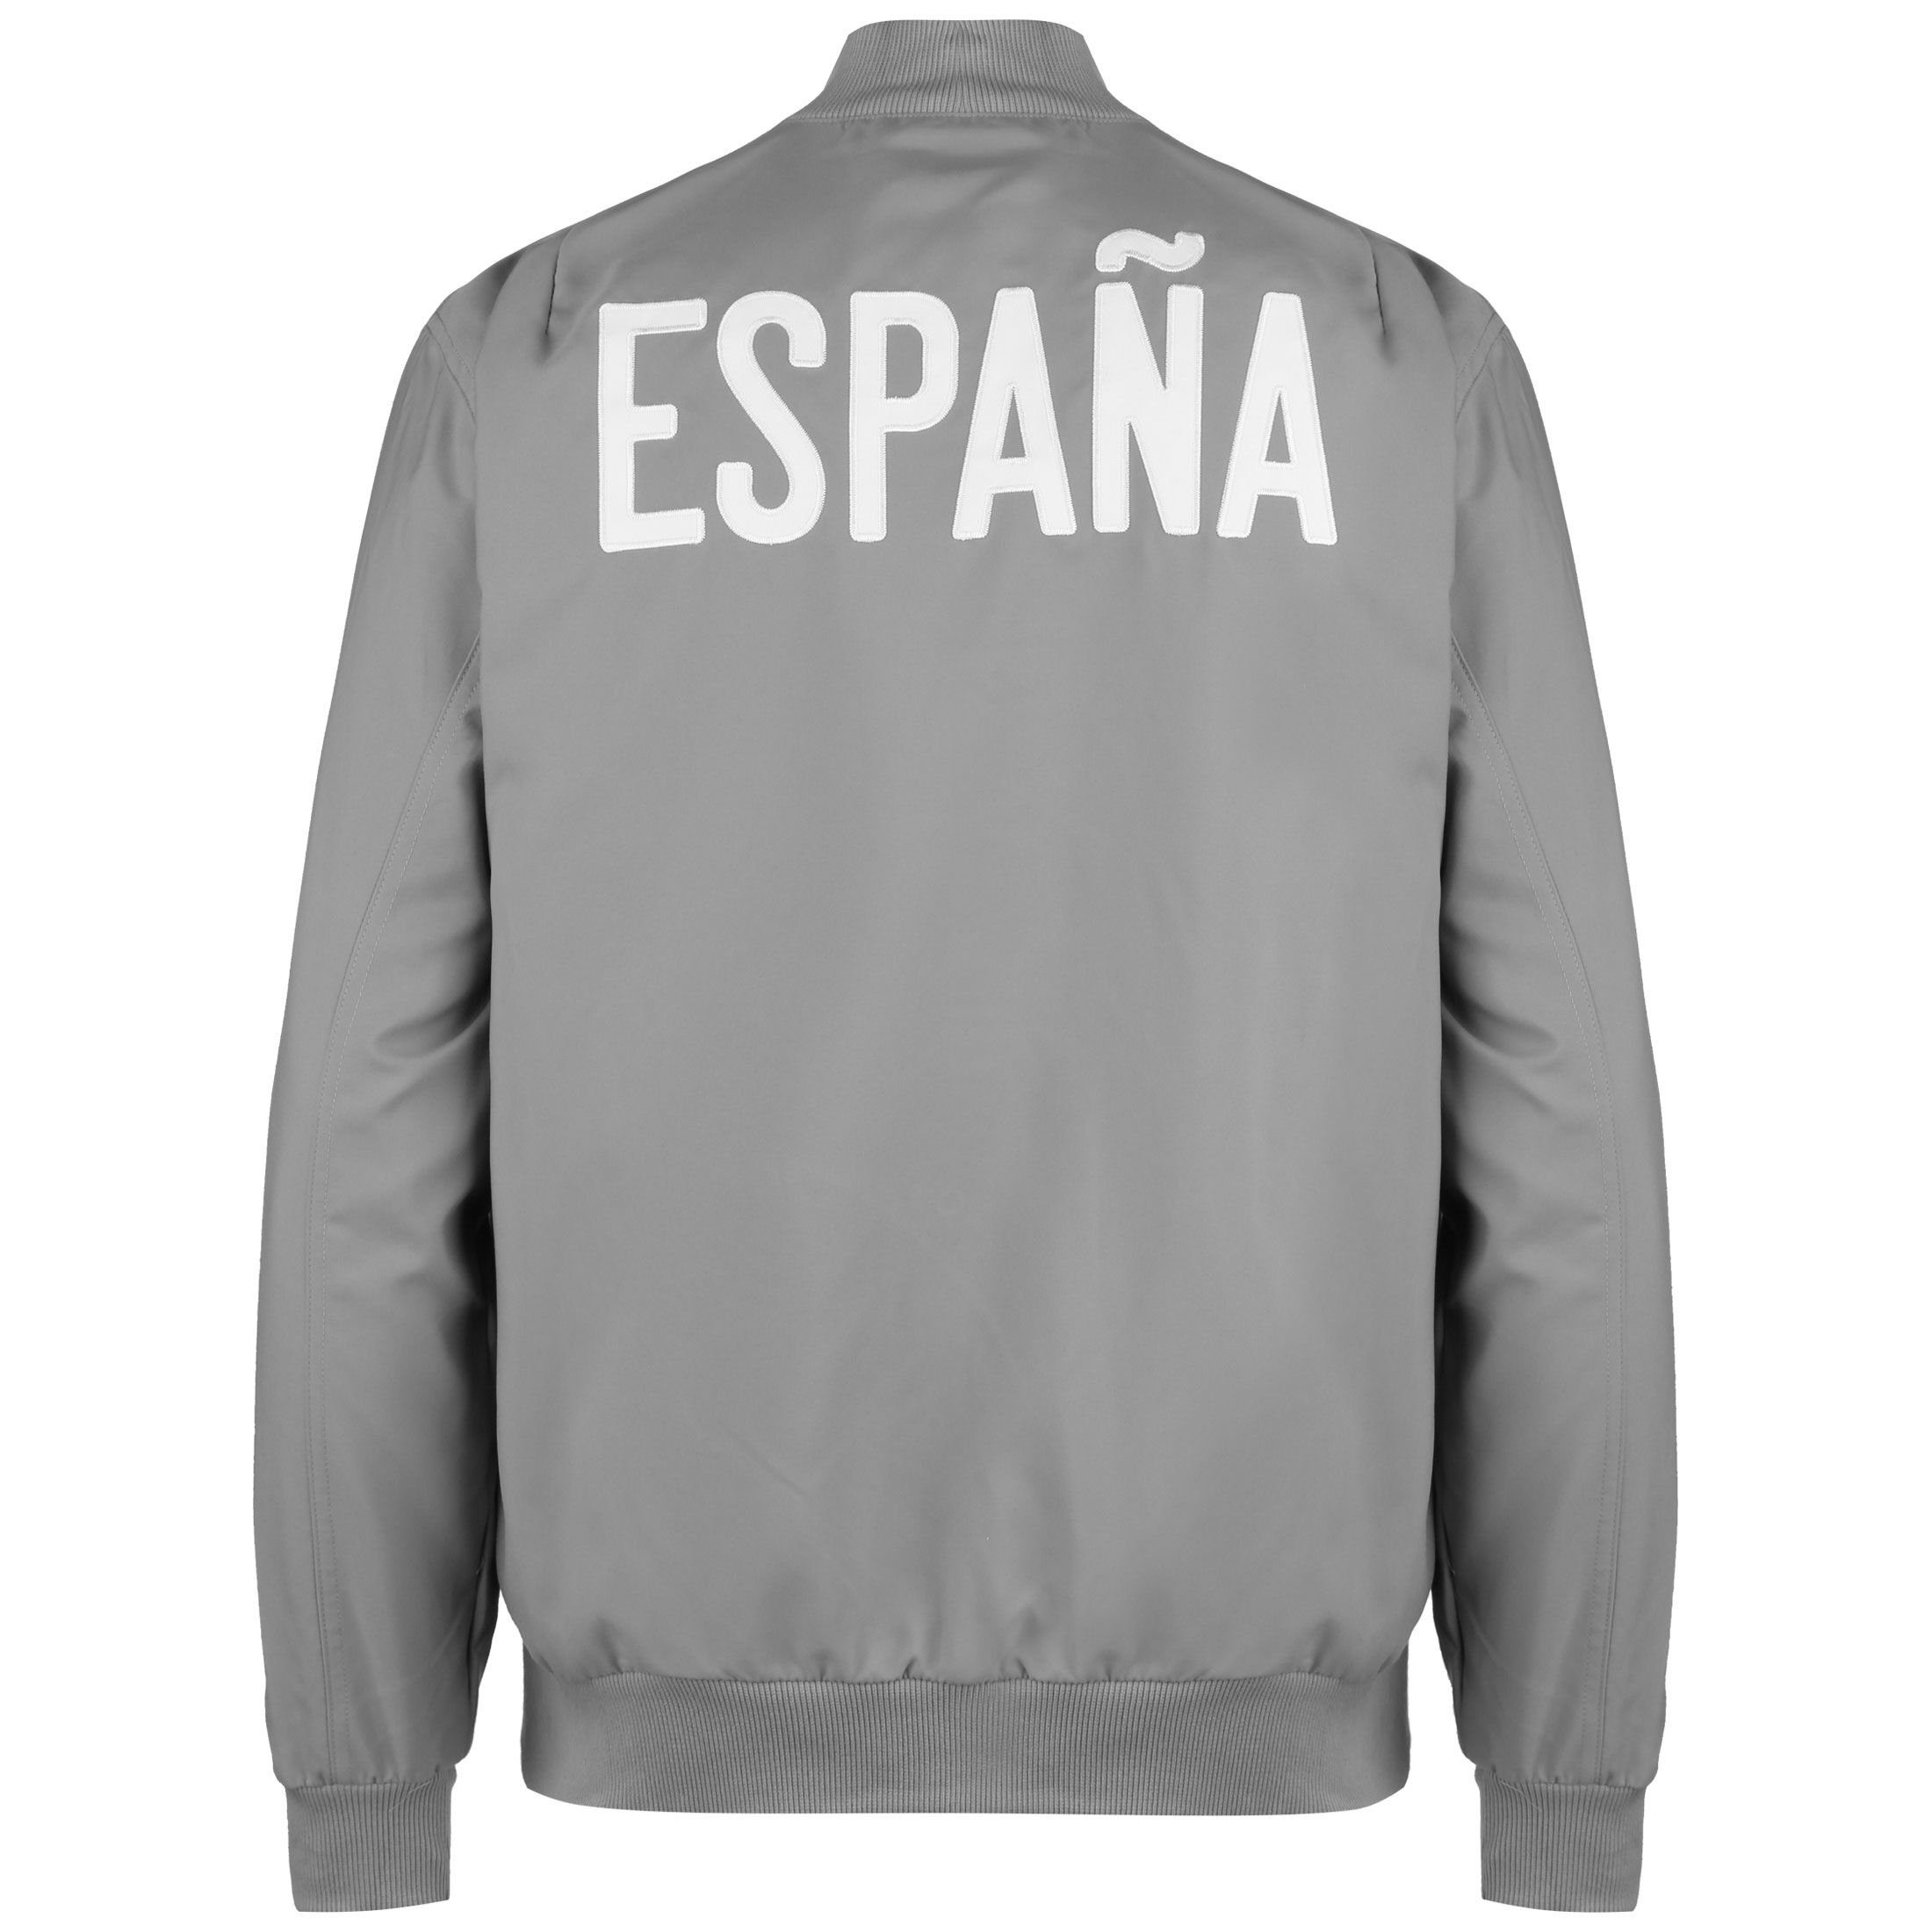 2021 Spanien adidas Herren Performance EM Sweatjacke Seasonal Special Jacke